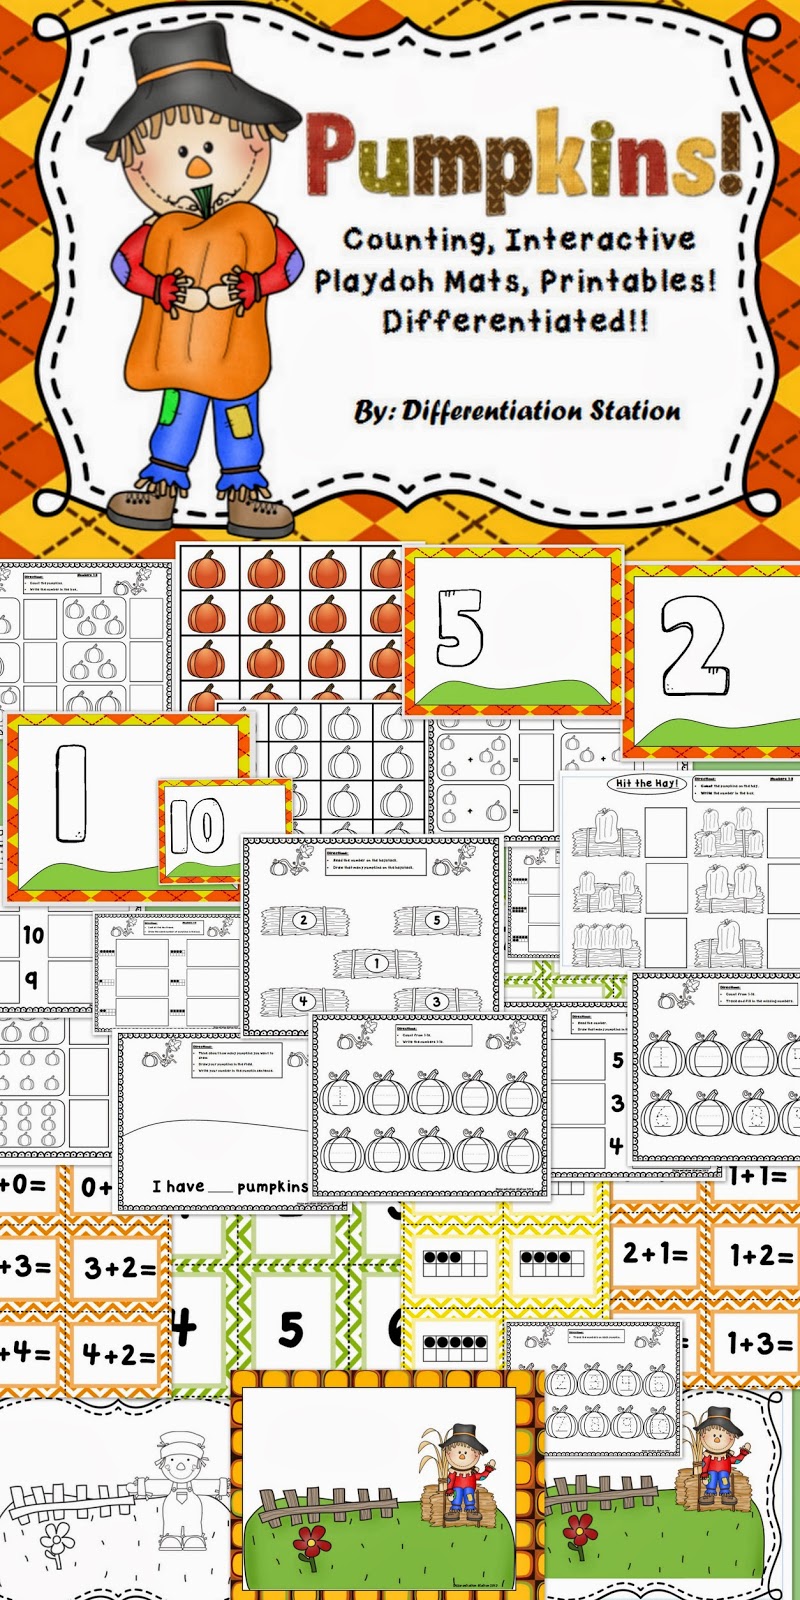 http://www.teacherspayteachers.com/Product/Pumpkins-Interactive-PlayDough-Mats-Counting-Centers-and-Games-Printables-898700